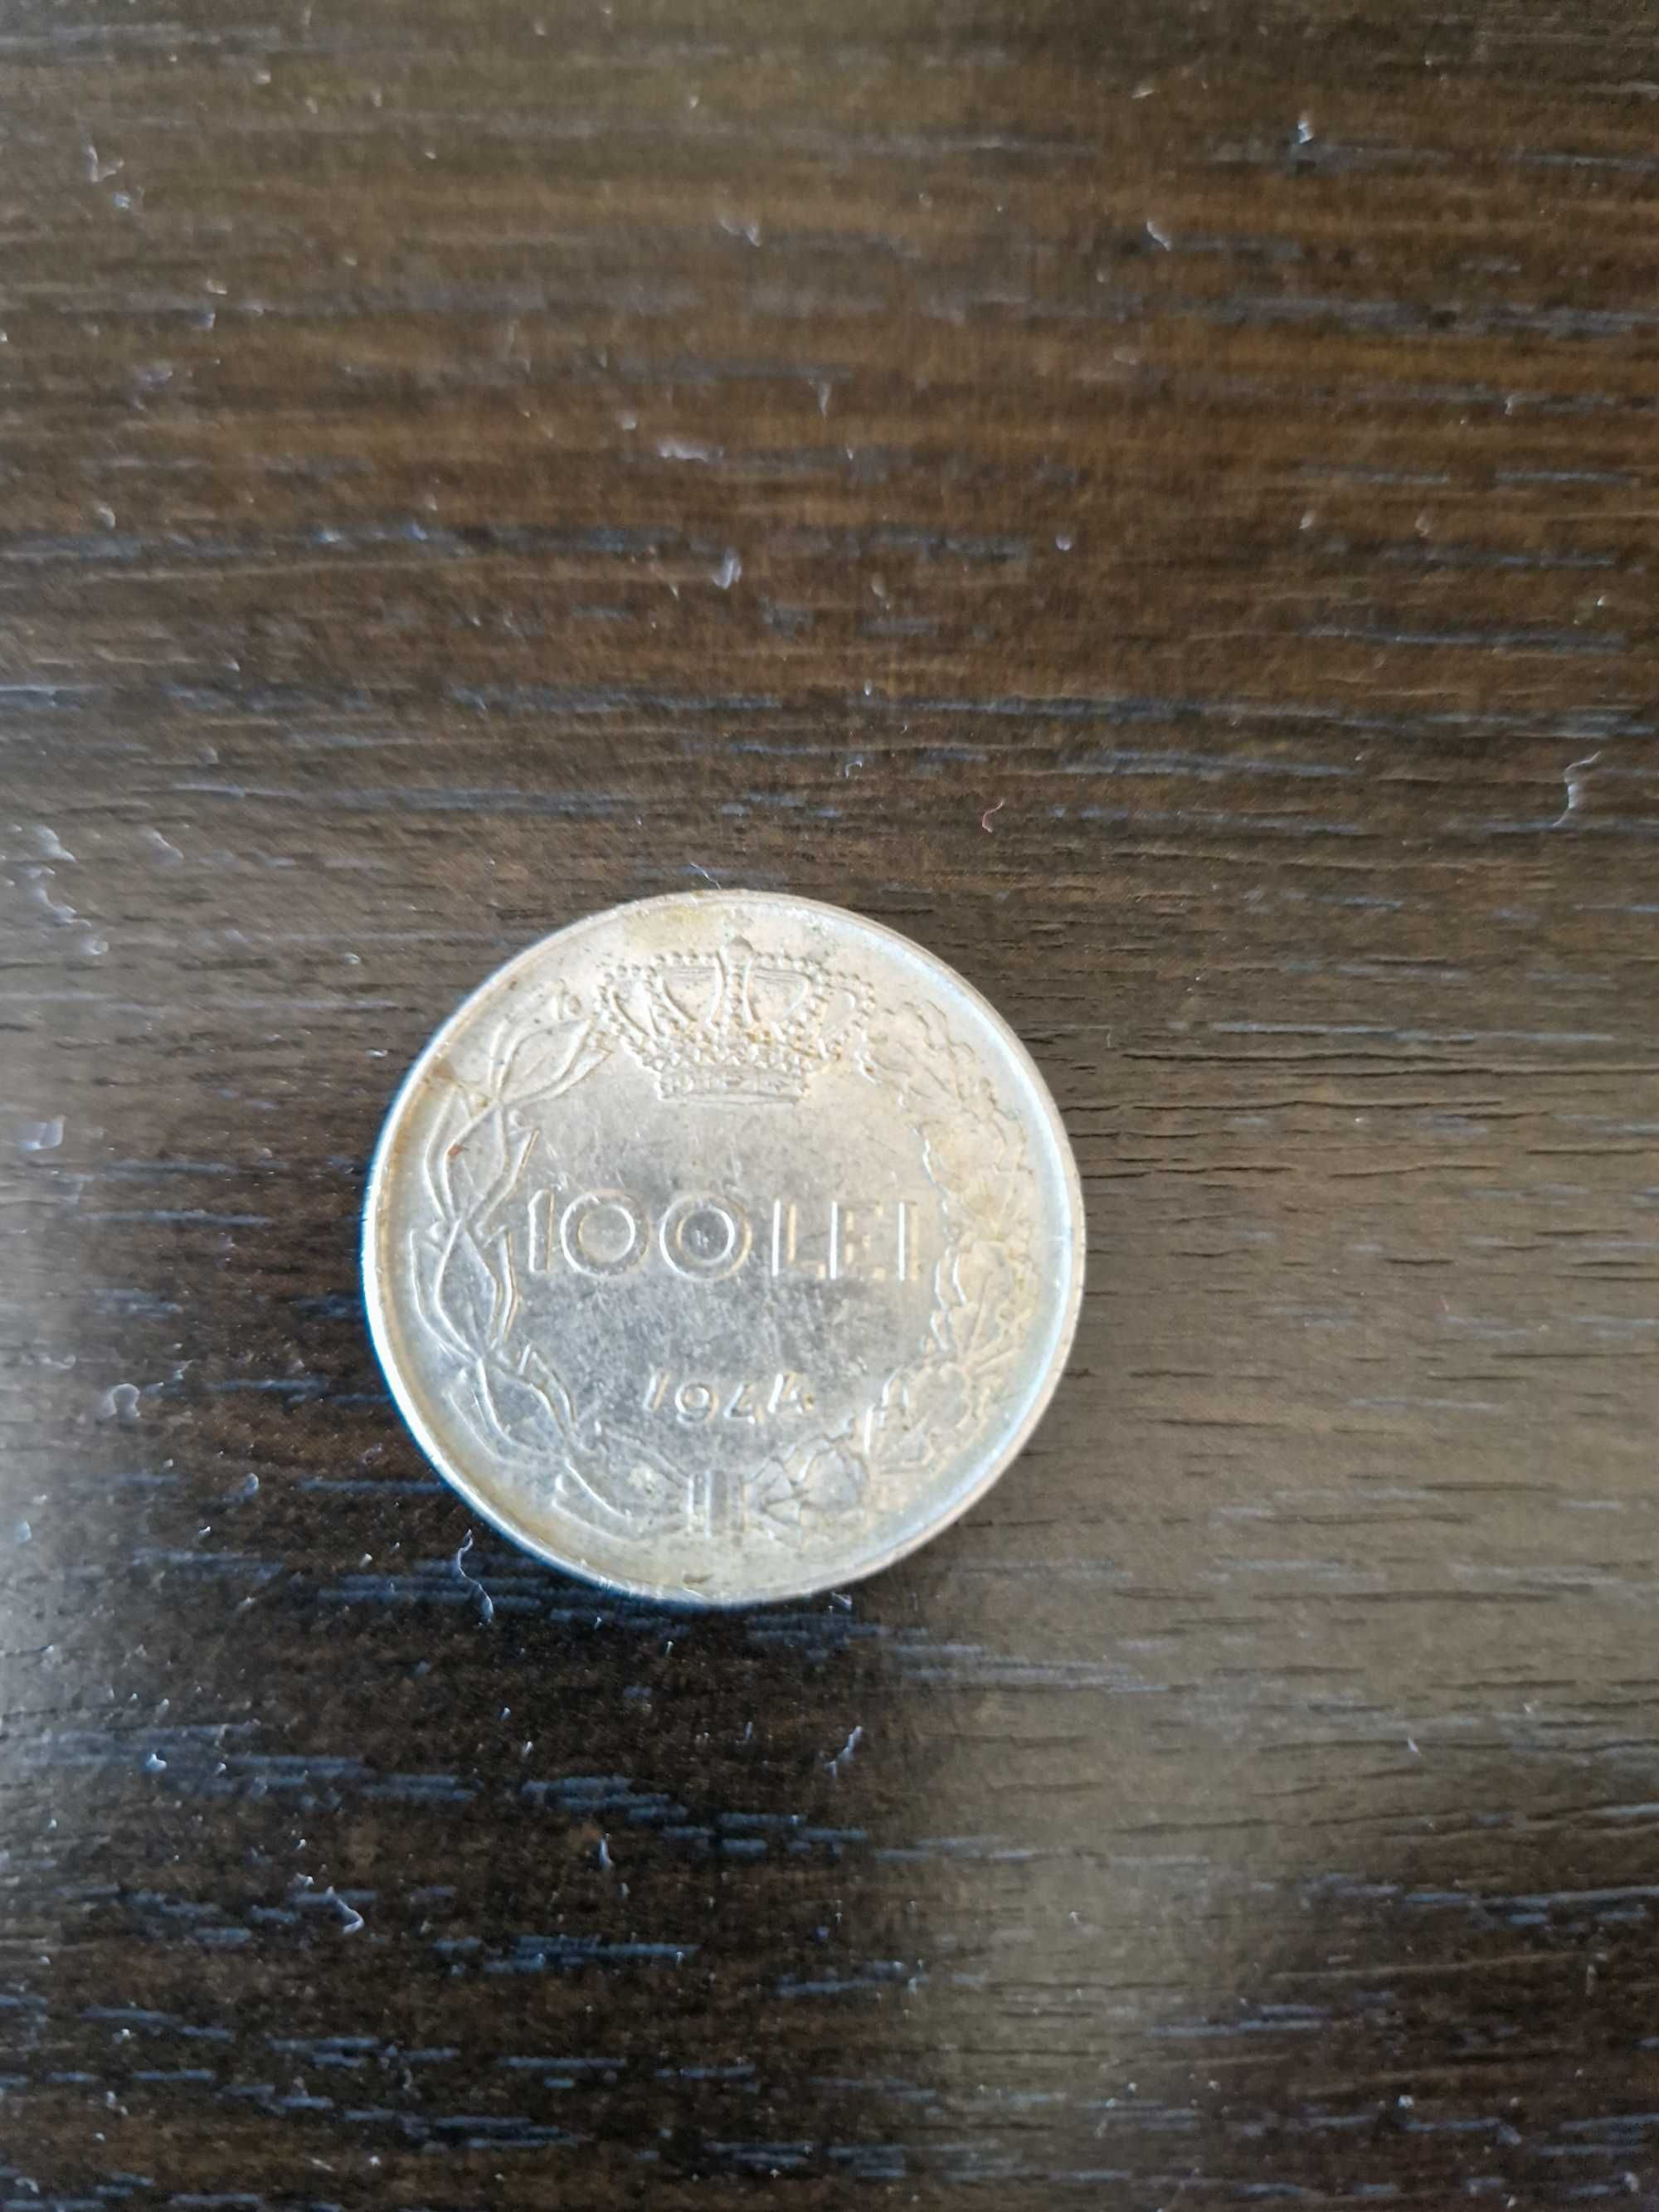 Moneda 100 lei 1944